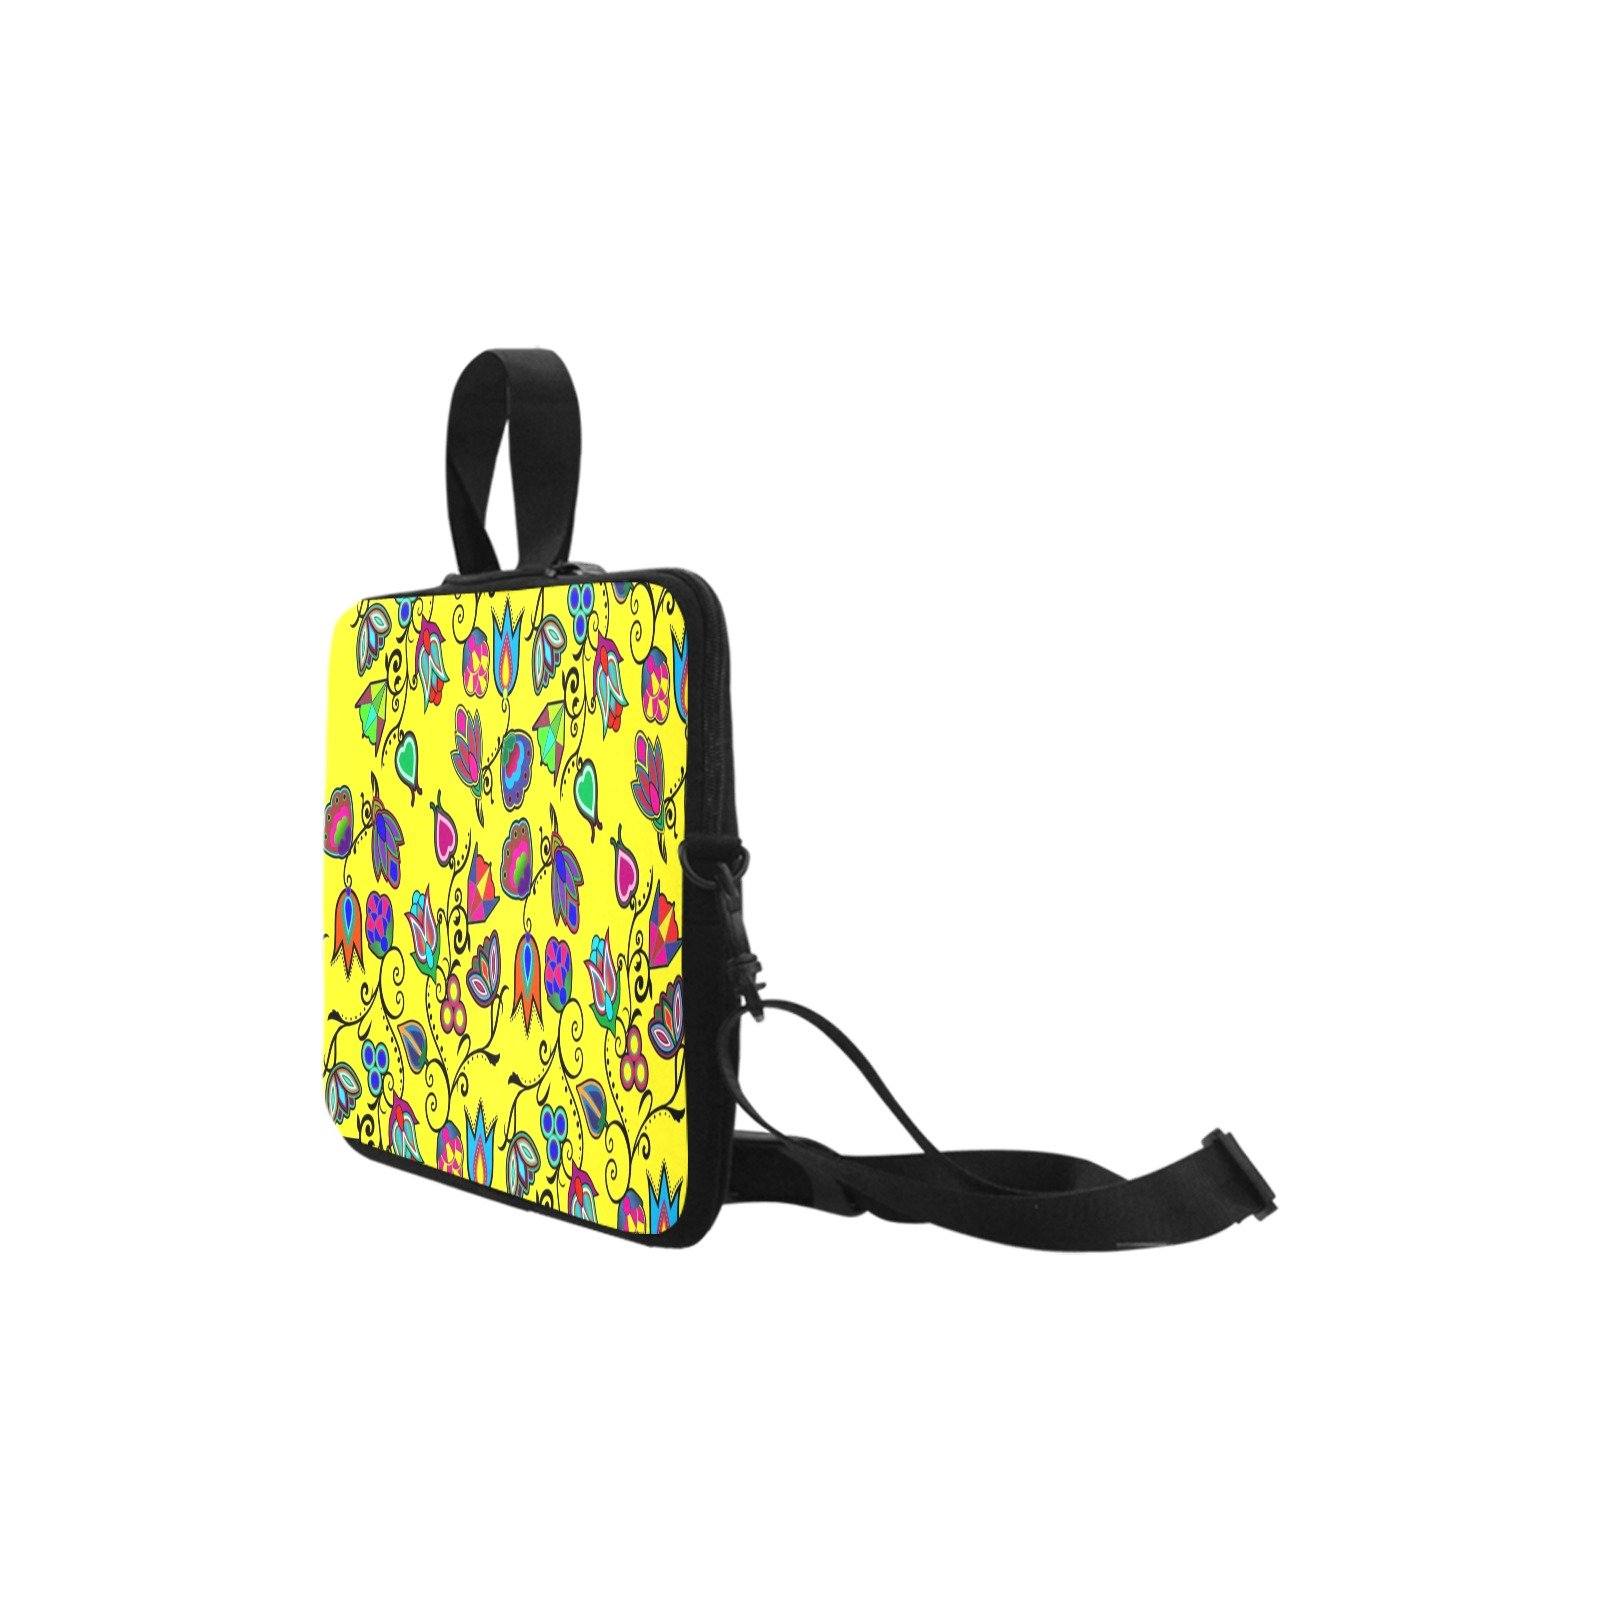 Indigenous Paisley Yellow Laptop Handbags 15" Laptop Handbags 15" e-joyer 